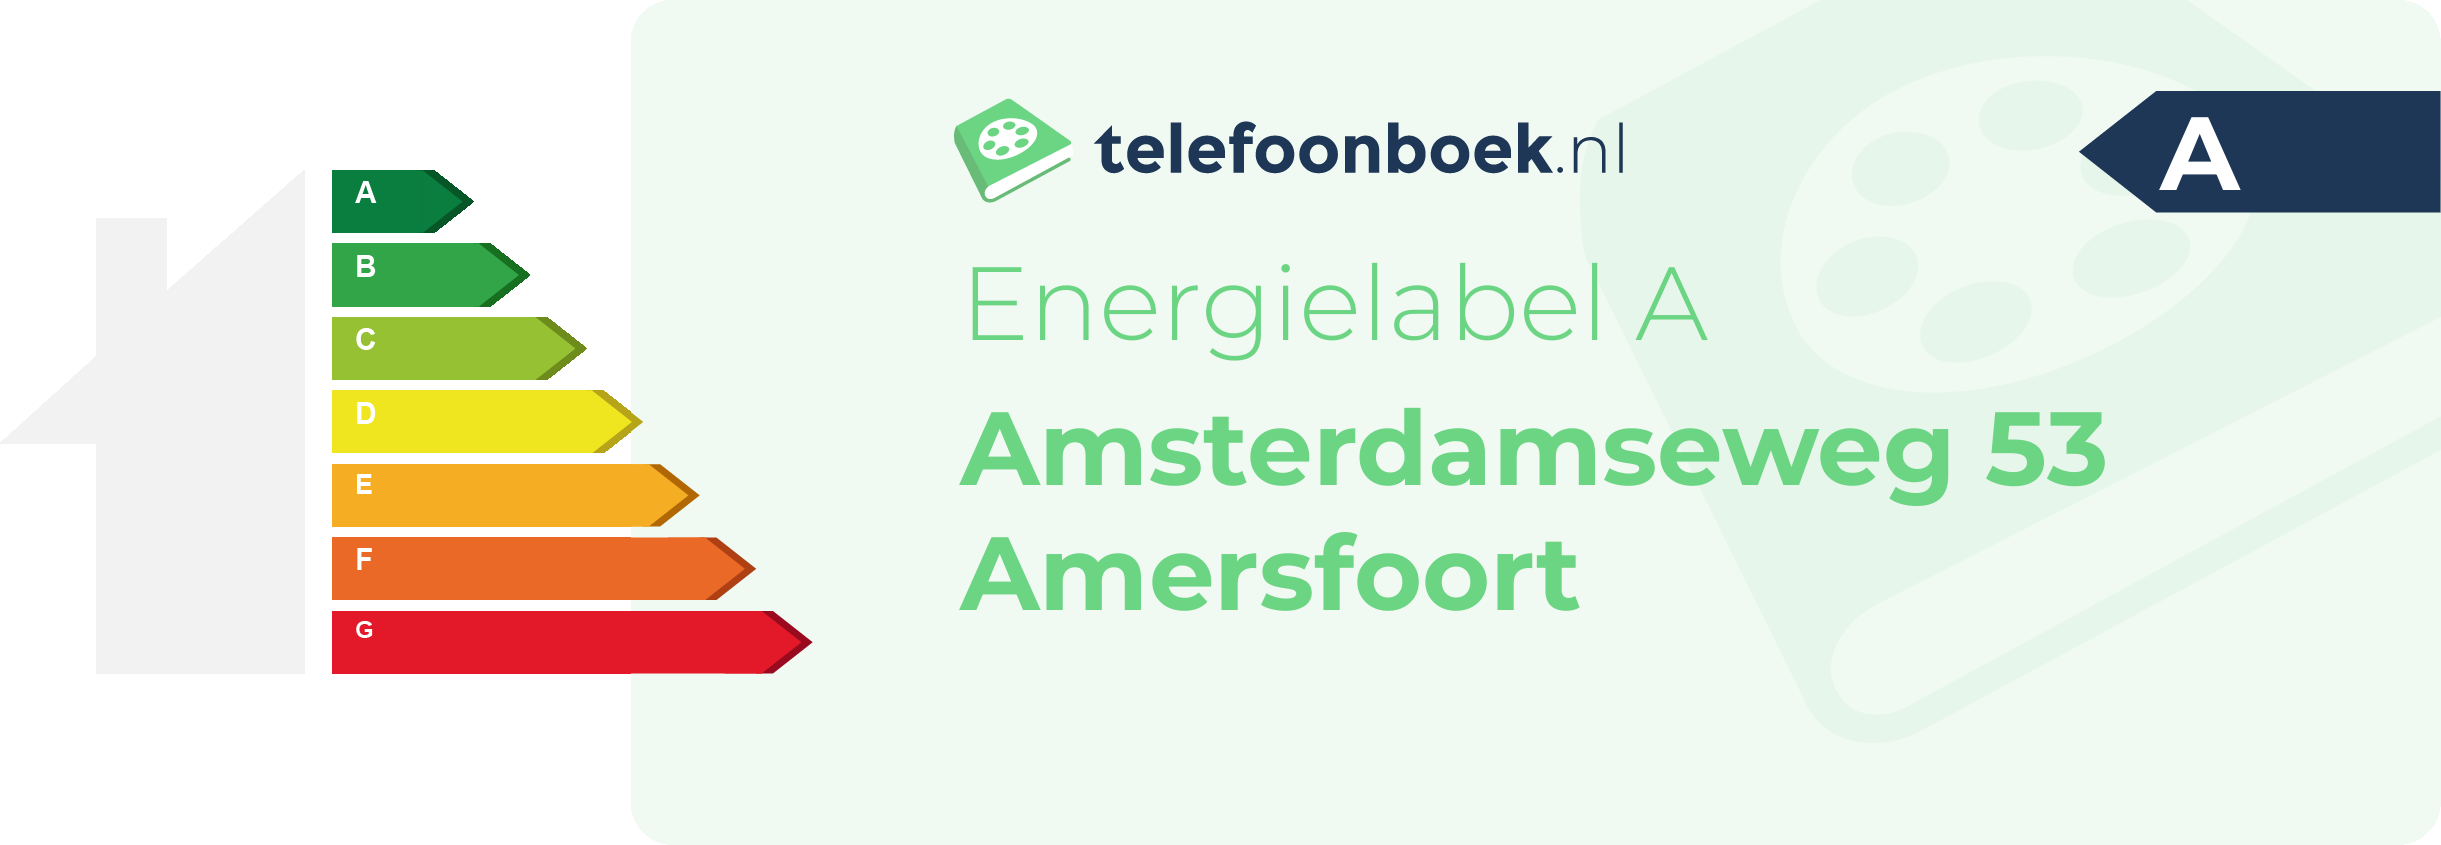 Energielabel Amsterdamseweg 53 Amersfoort